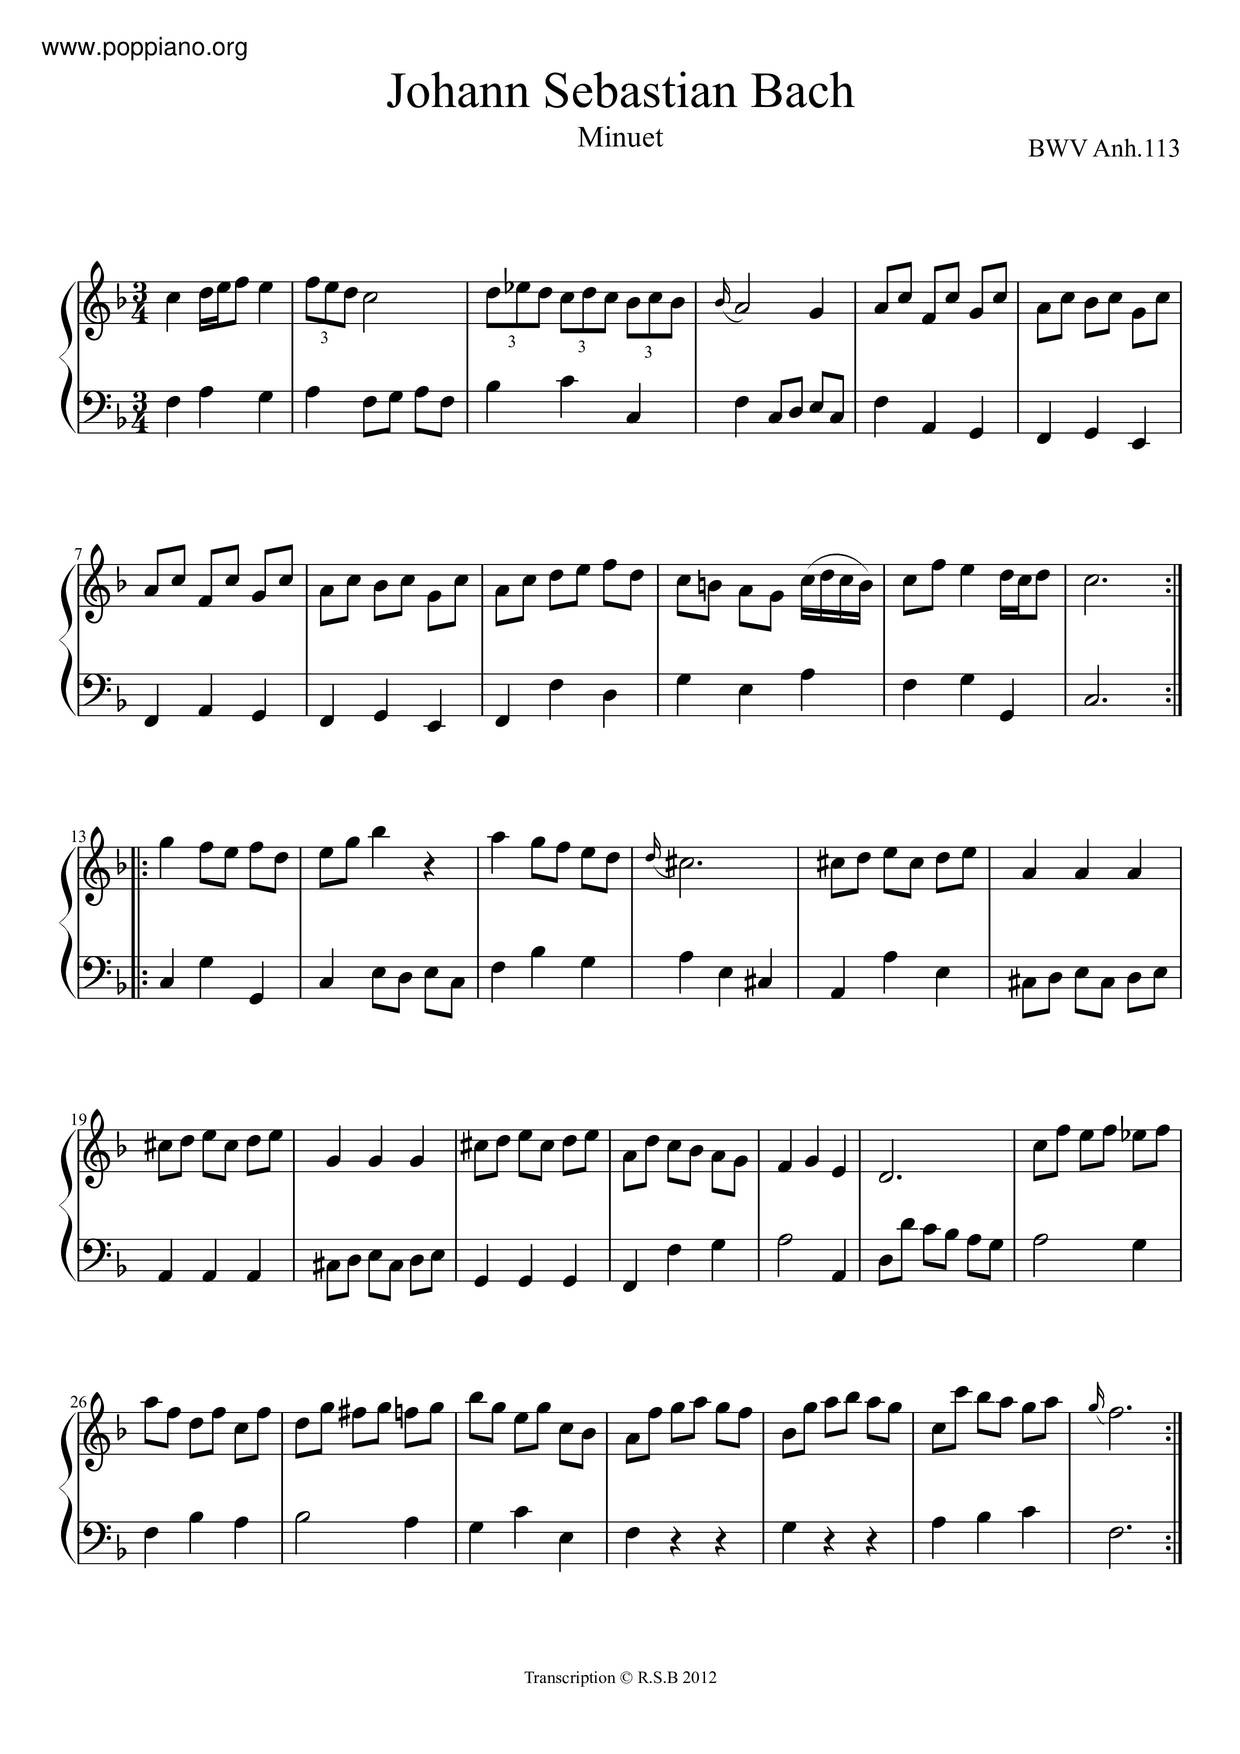 Minuet In F Major, BWV Anh. 113 Score